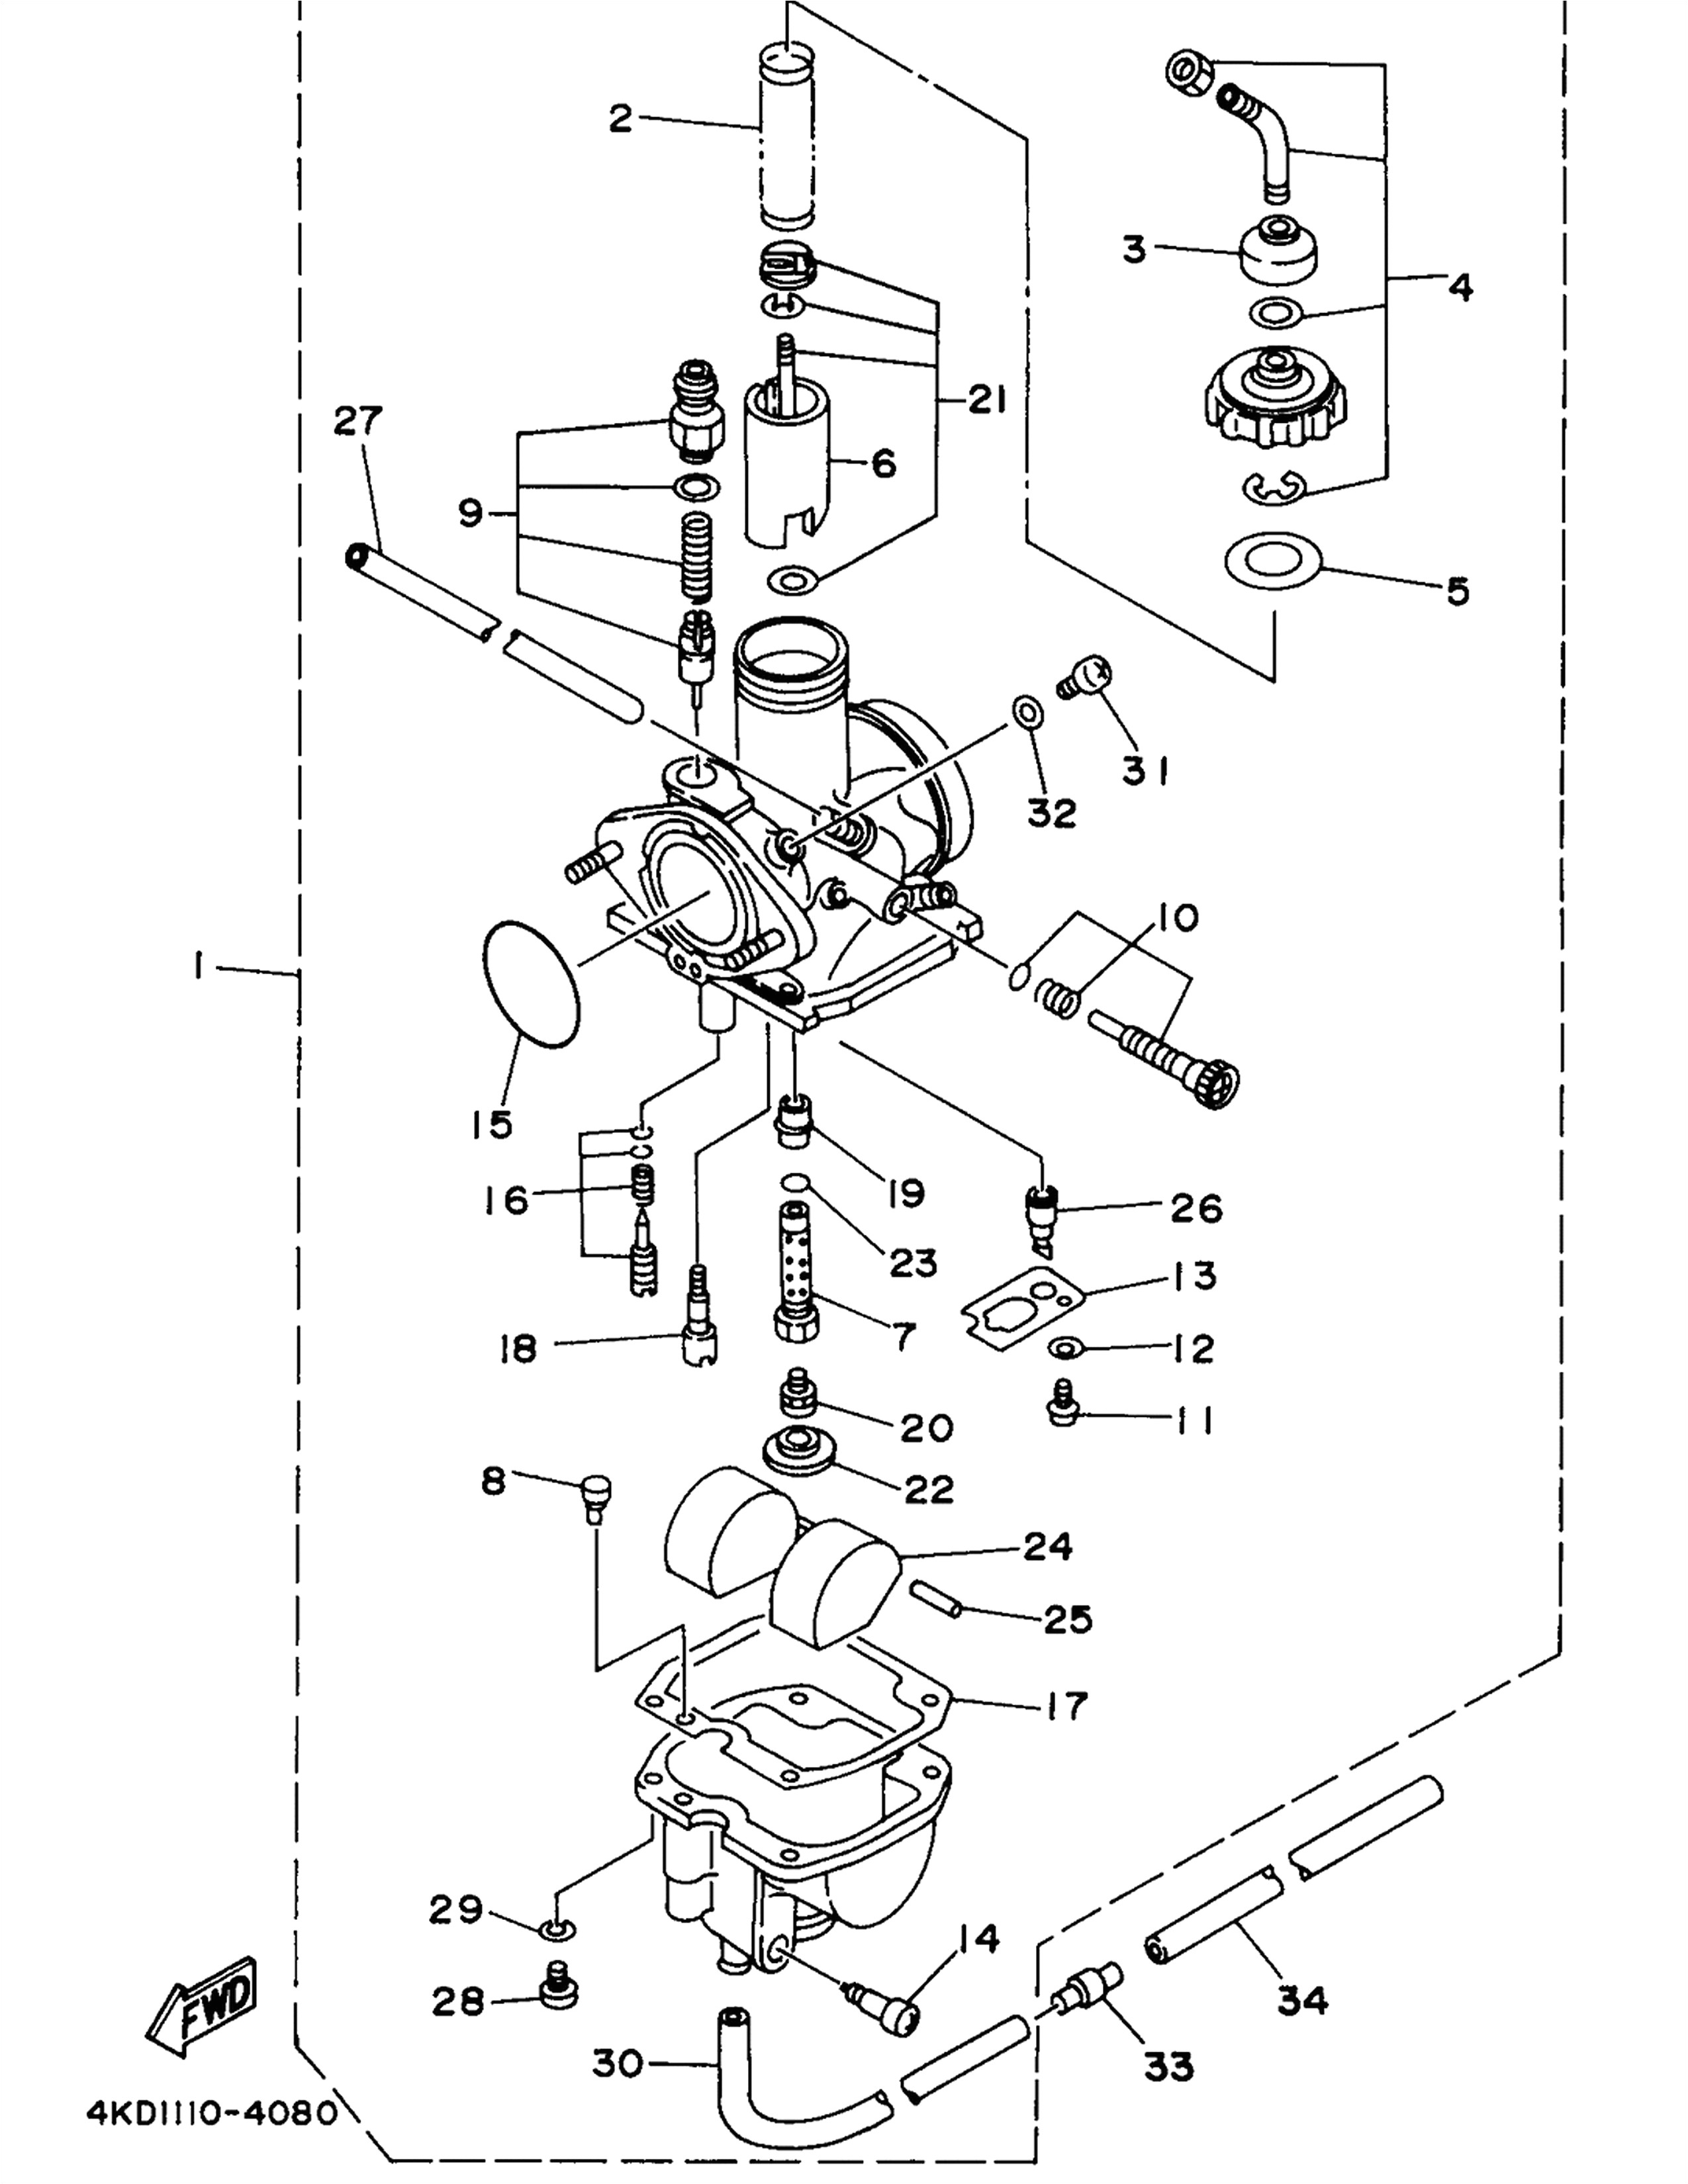 1999 mitsubishi eclipse engine diagram wiring diagram technic